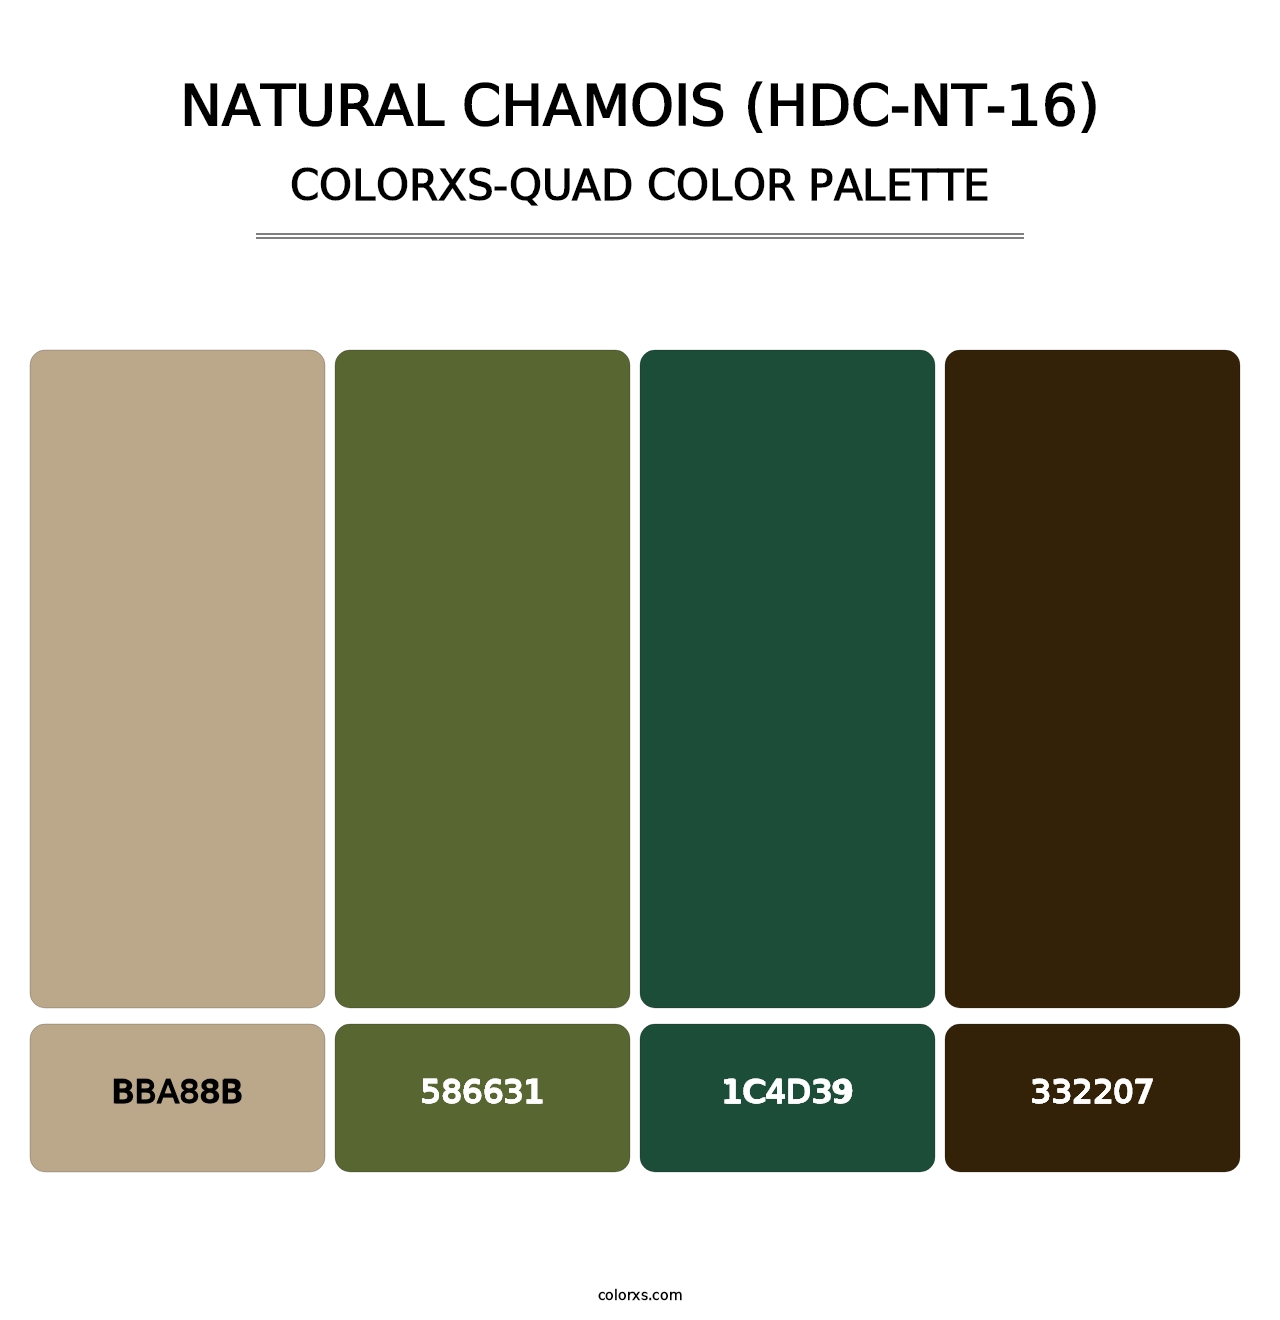 Natural Chamois (HDC-NT-16) - Colorxs Quad Palette